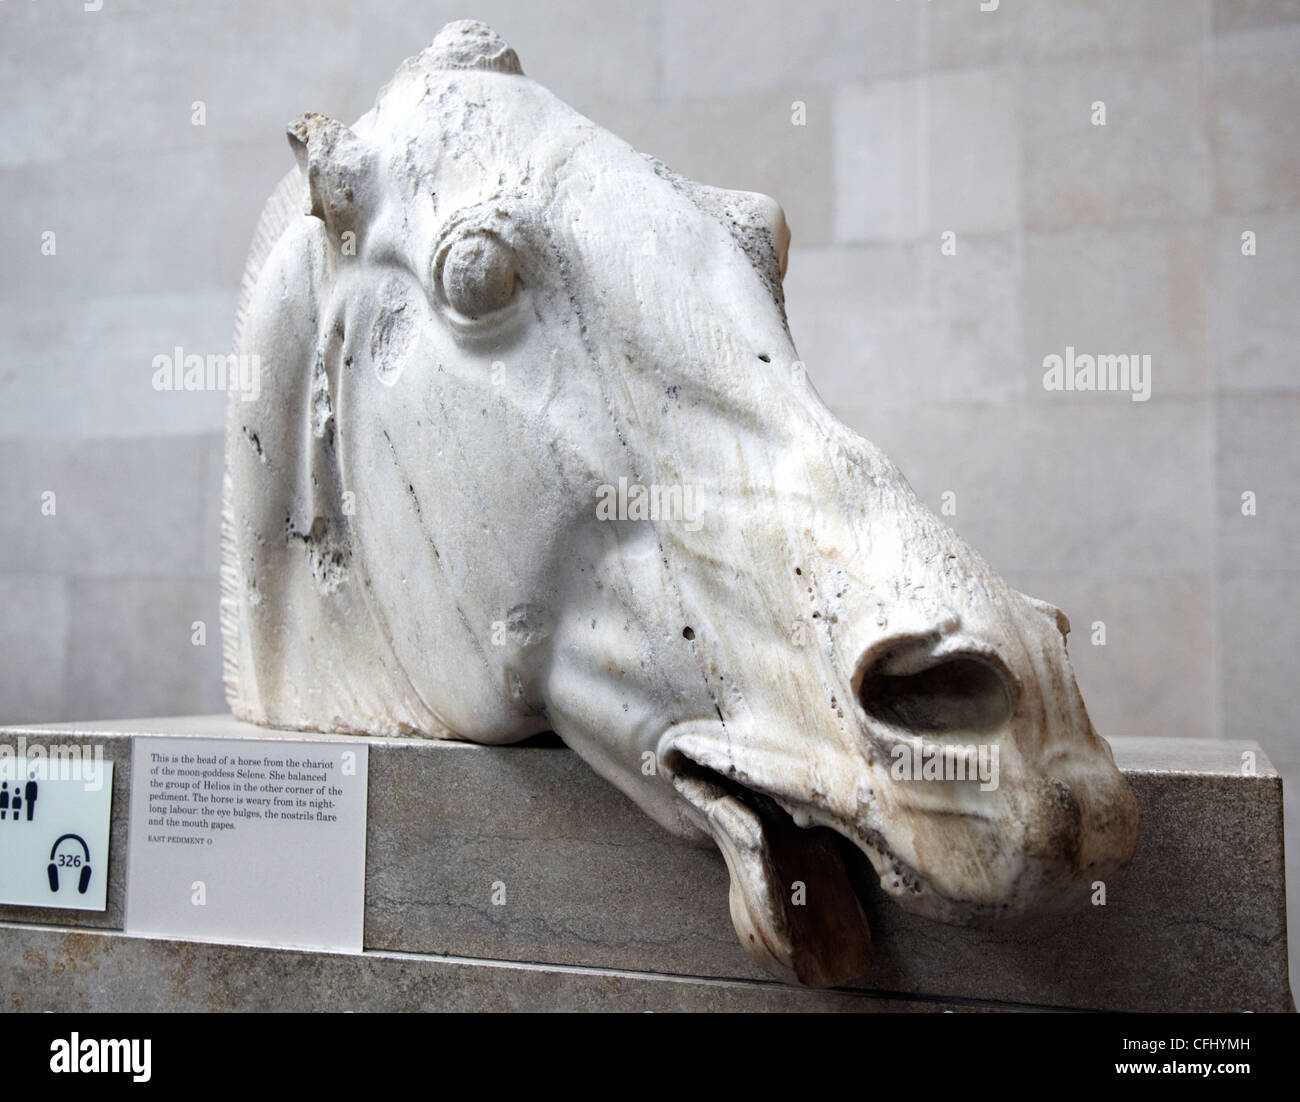 Horses Head Part Of The Parthenon Frieze The British Museum London UK Europe Stock Photo